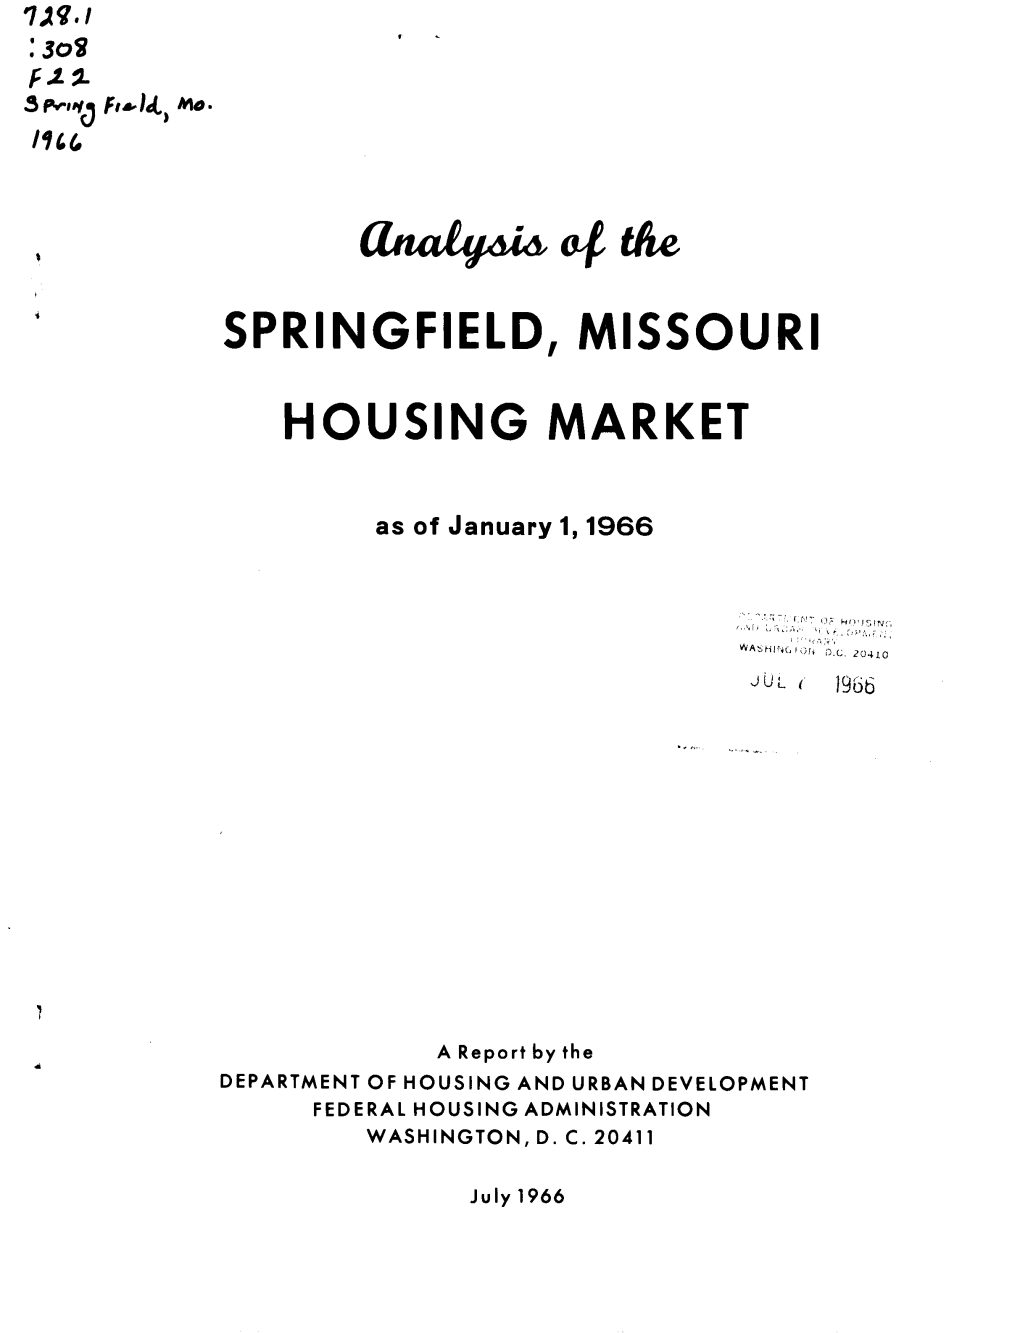 Analysis of the Springfield Missouri Housing Market As